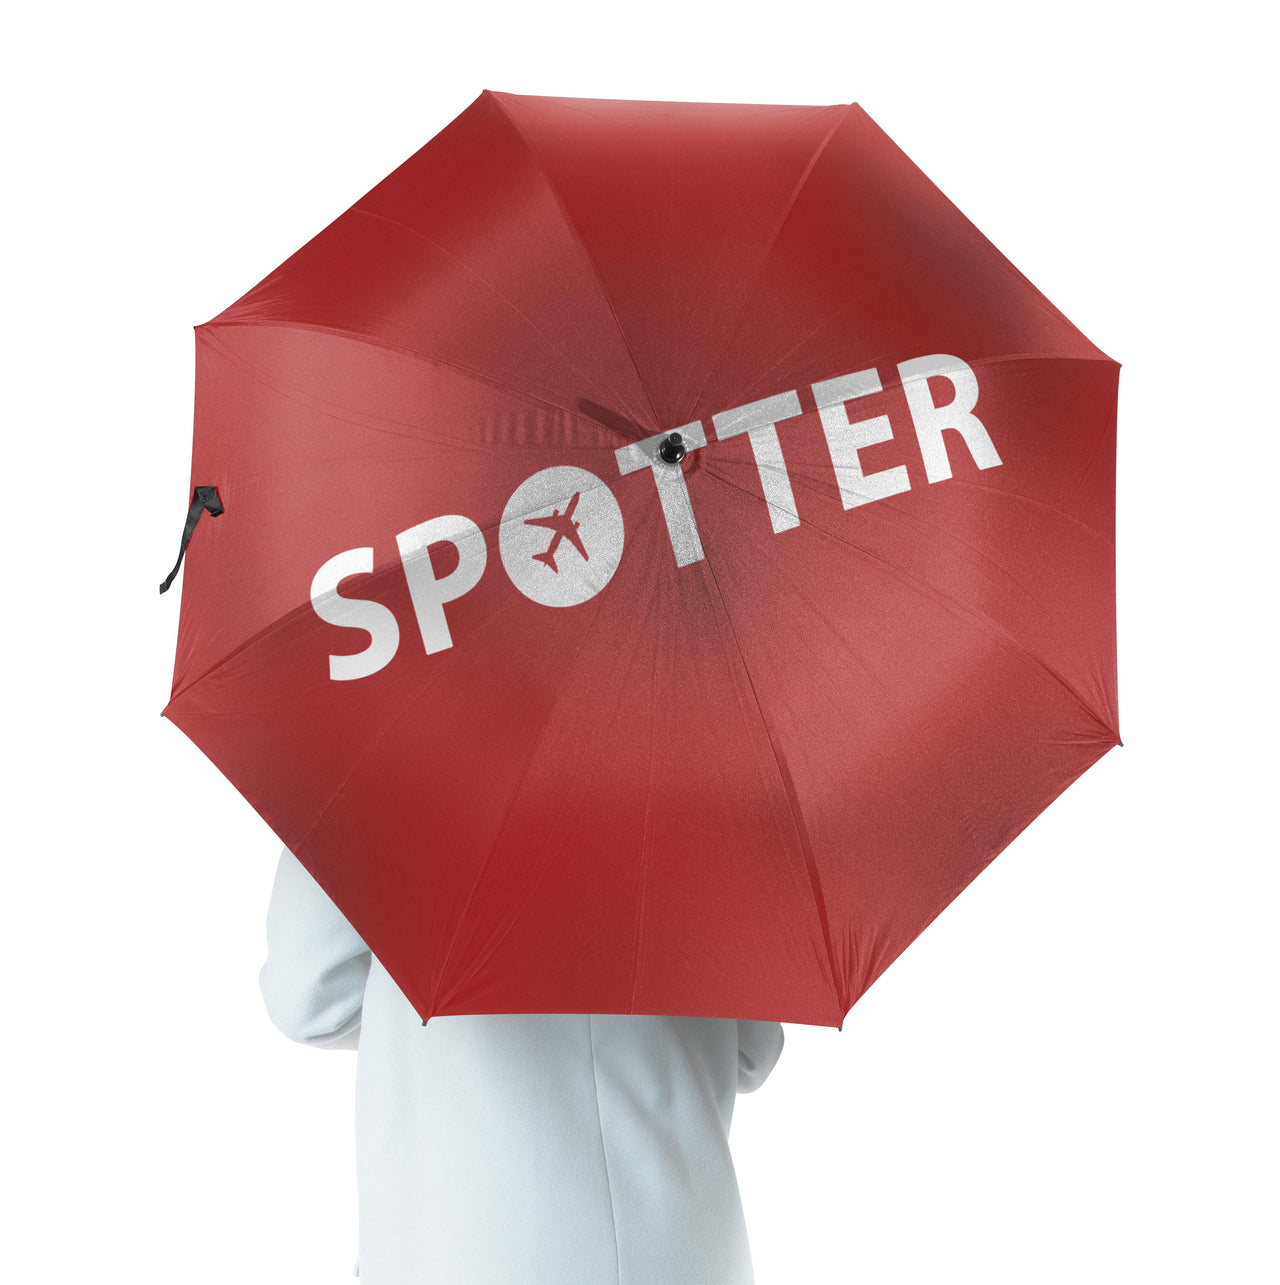 Spotter Designed Umbrella